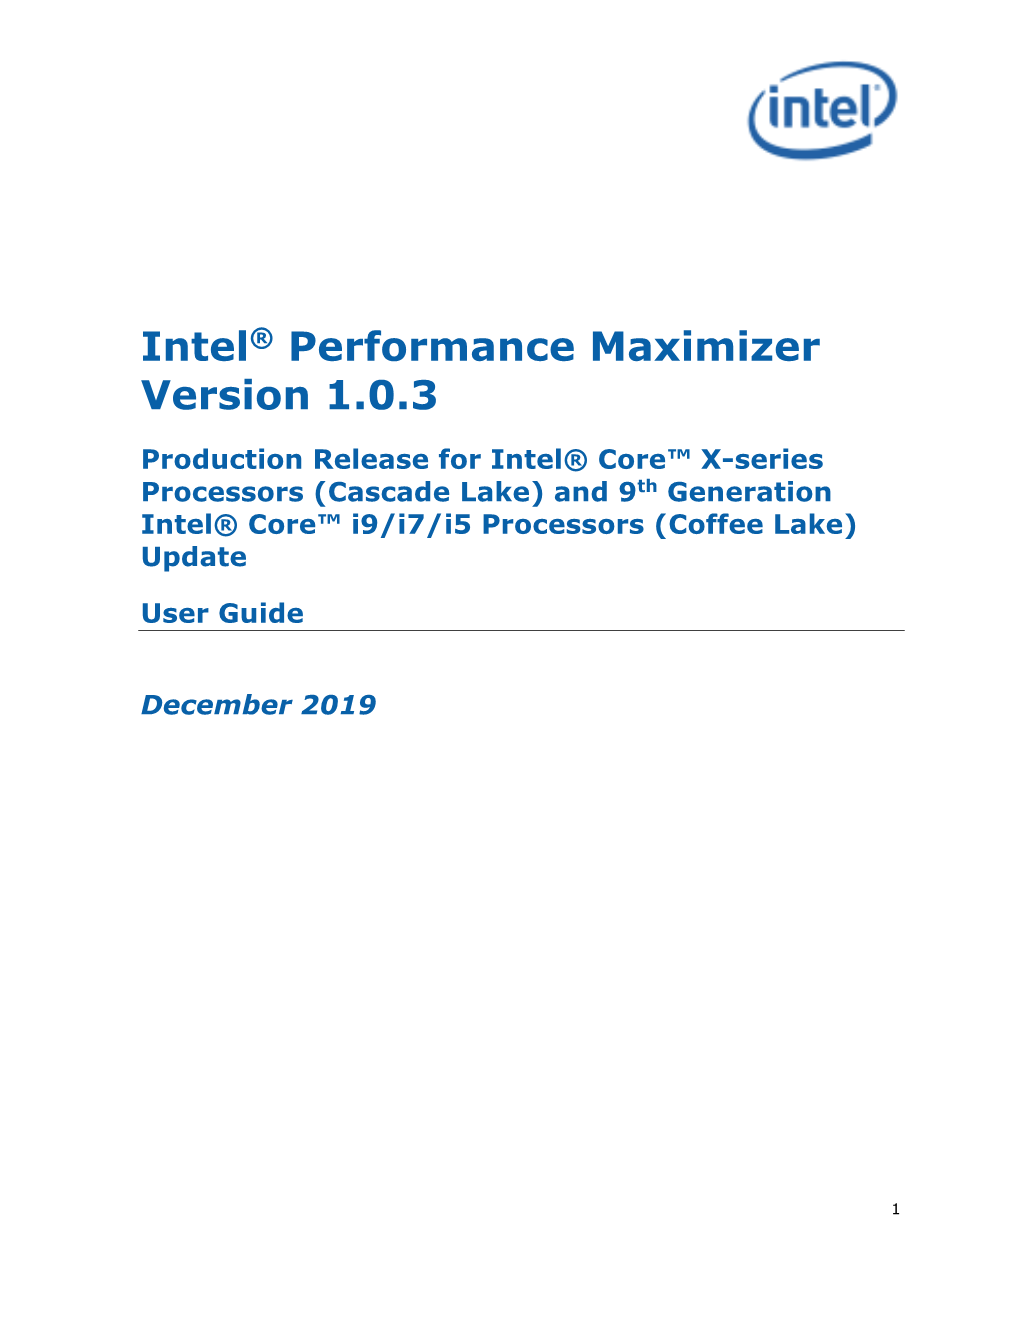 Intel® Performance Maximizer Version 1.0.3